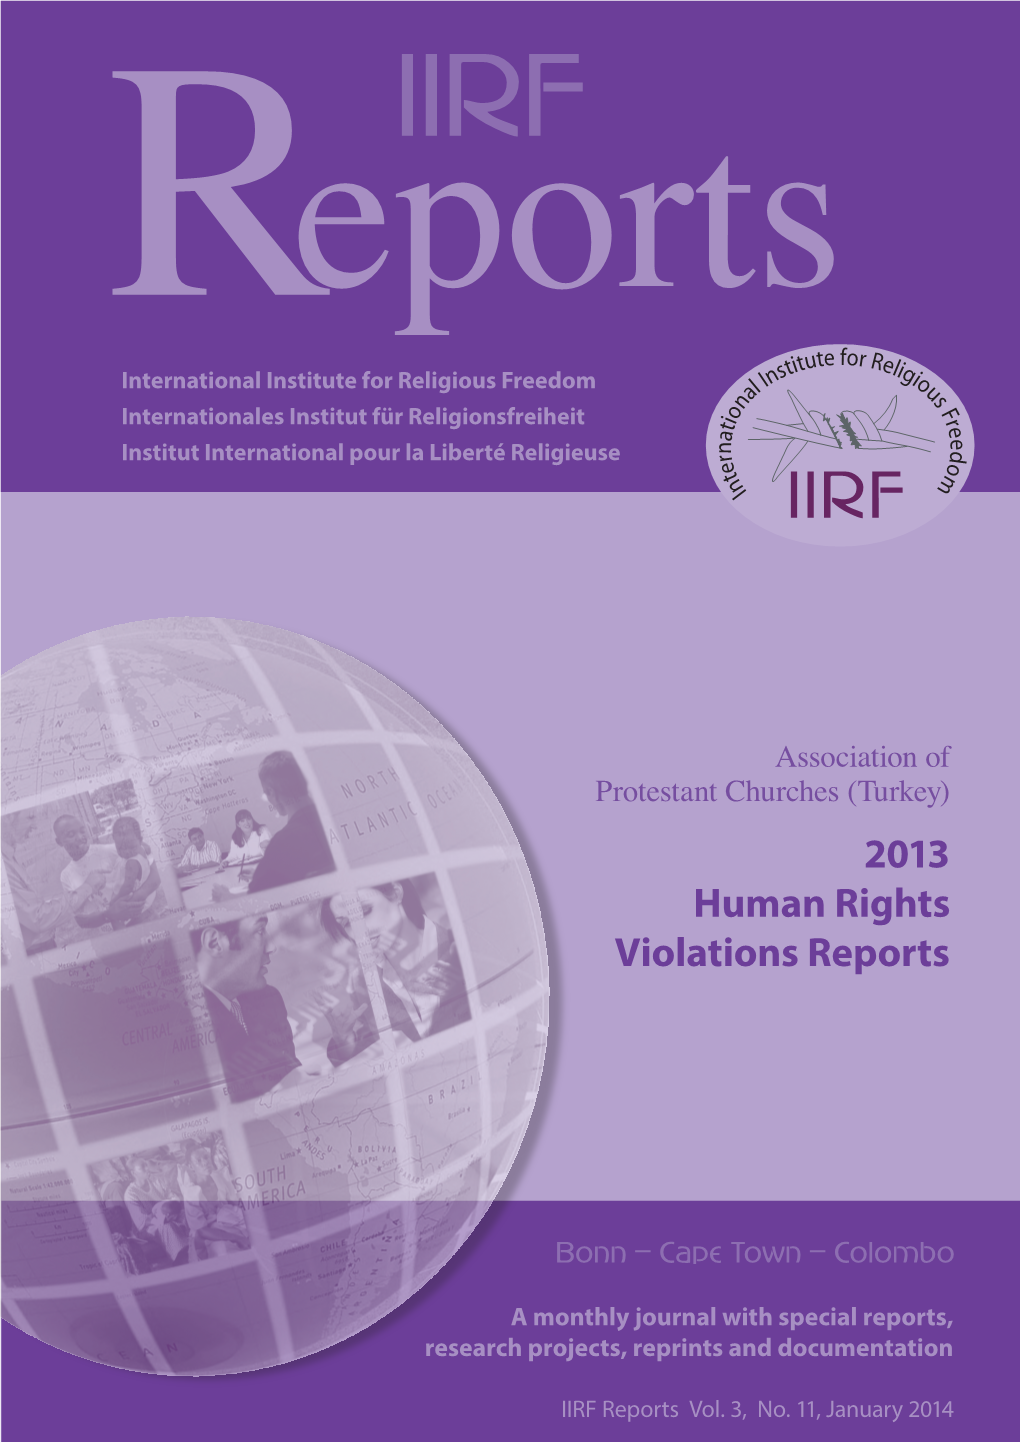 2013 Human Rights Violations Reports